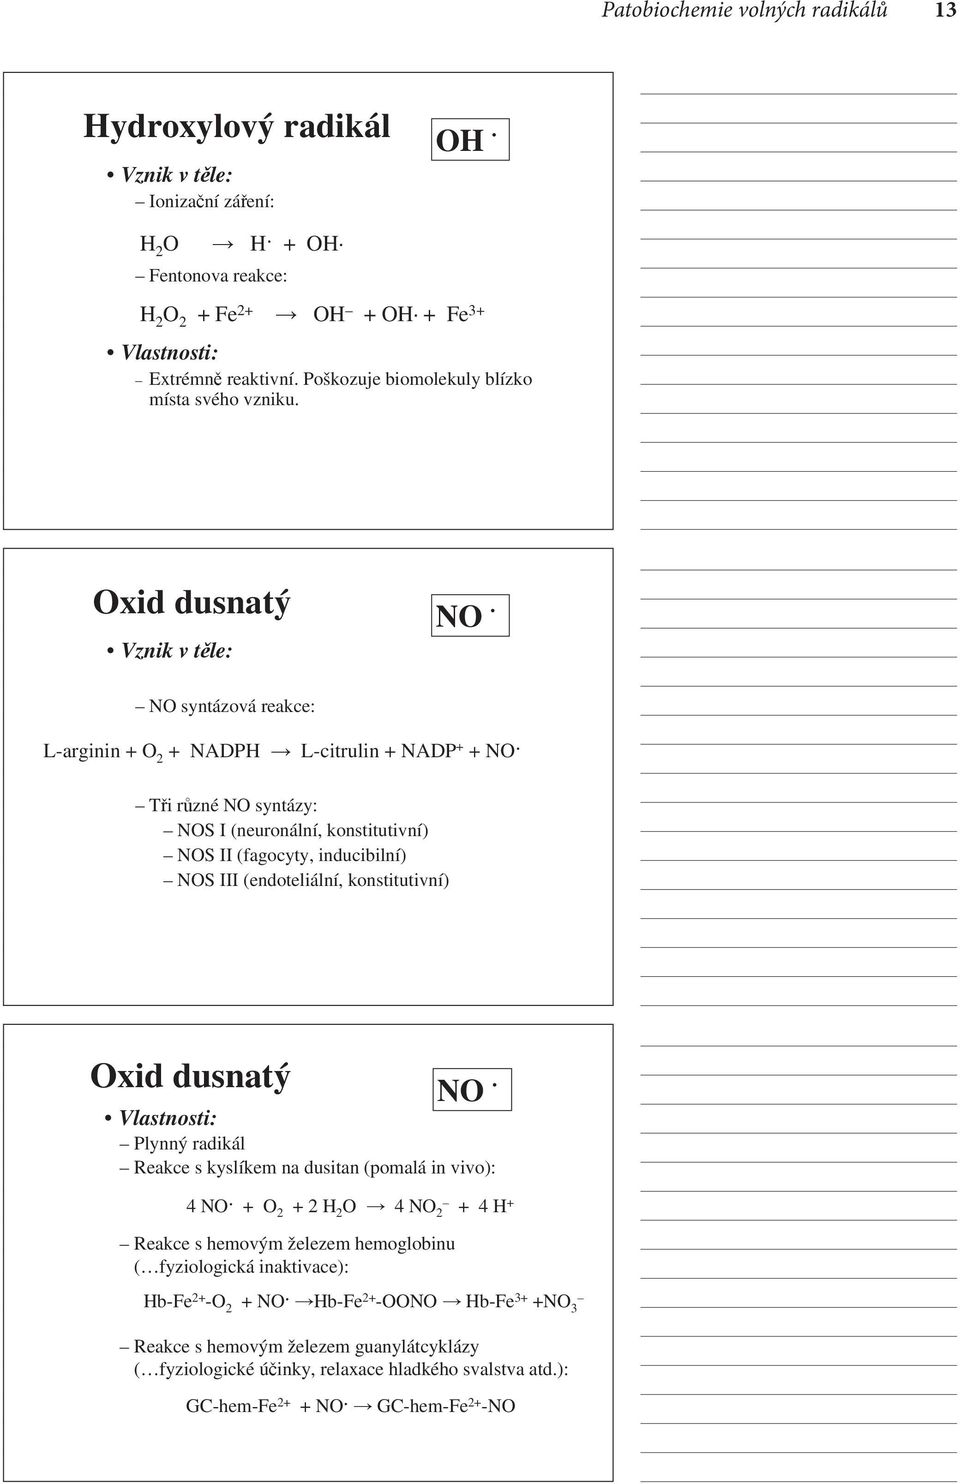 PATOBIOCHEMIE ve schématech - PDF Free Download